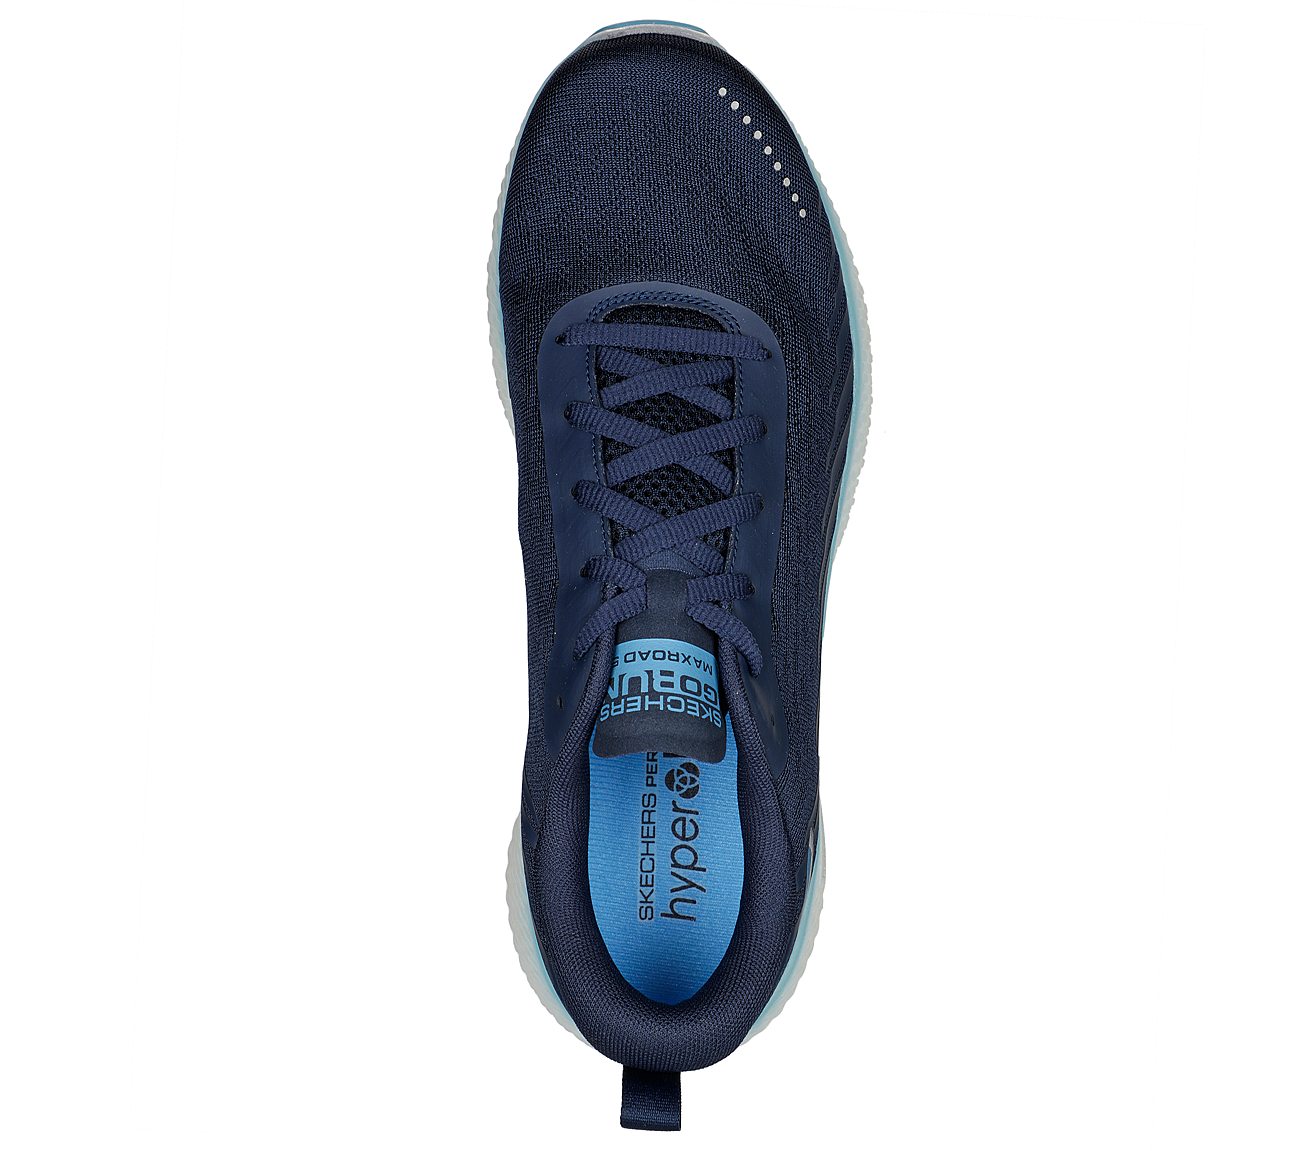 GO RUN MAXROAD 5, NAVY/BLUE Footwear Top View